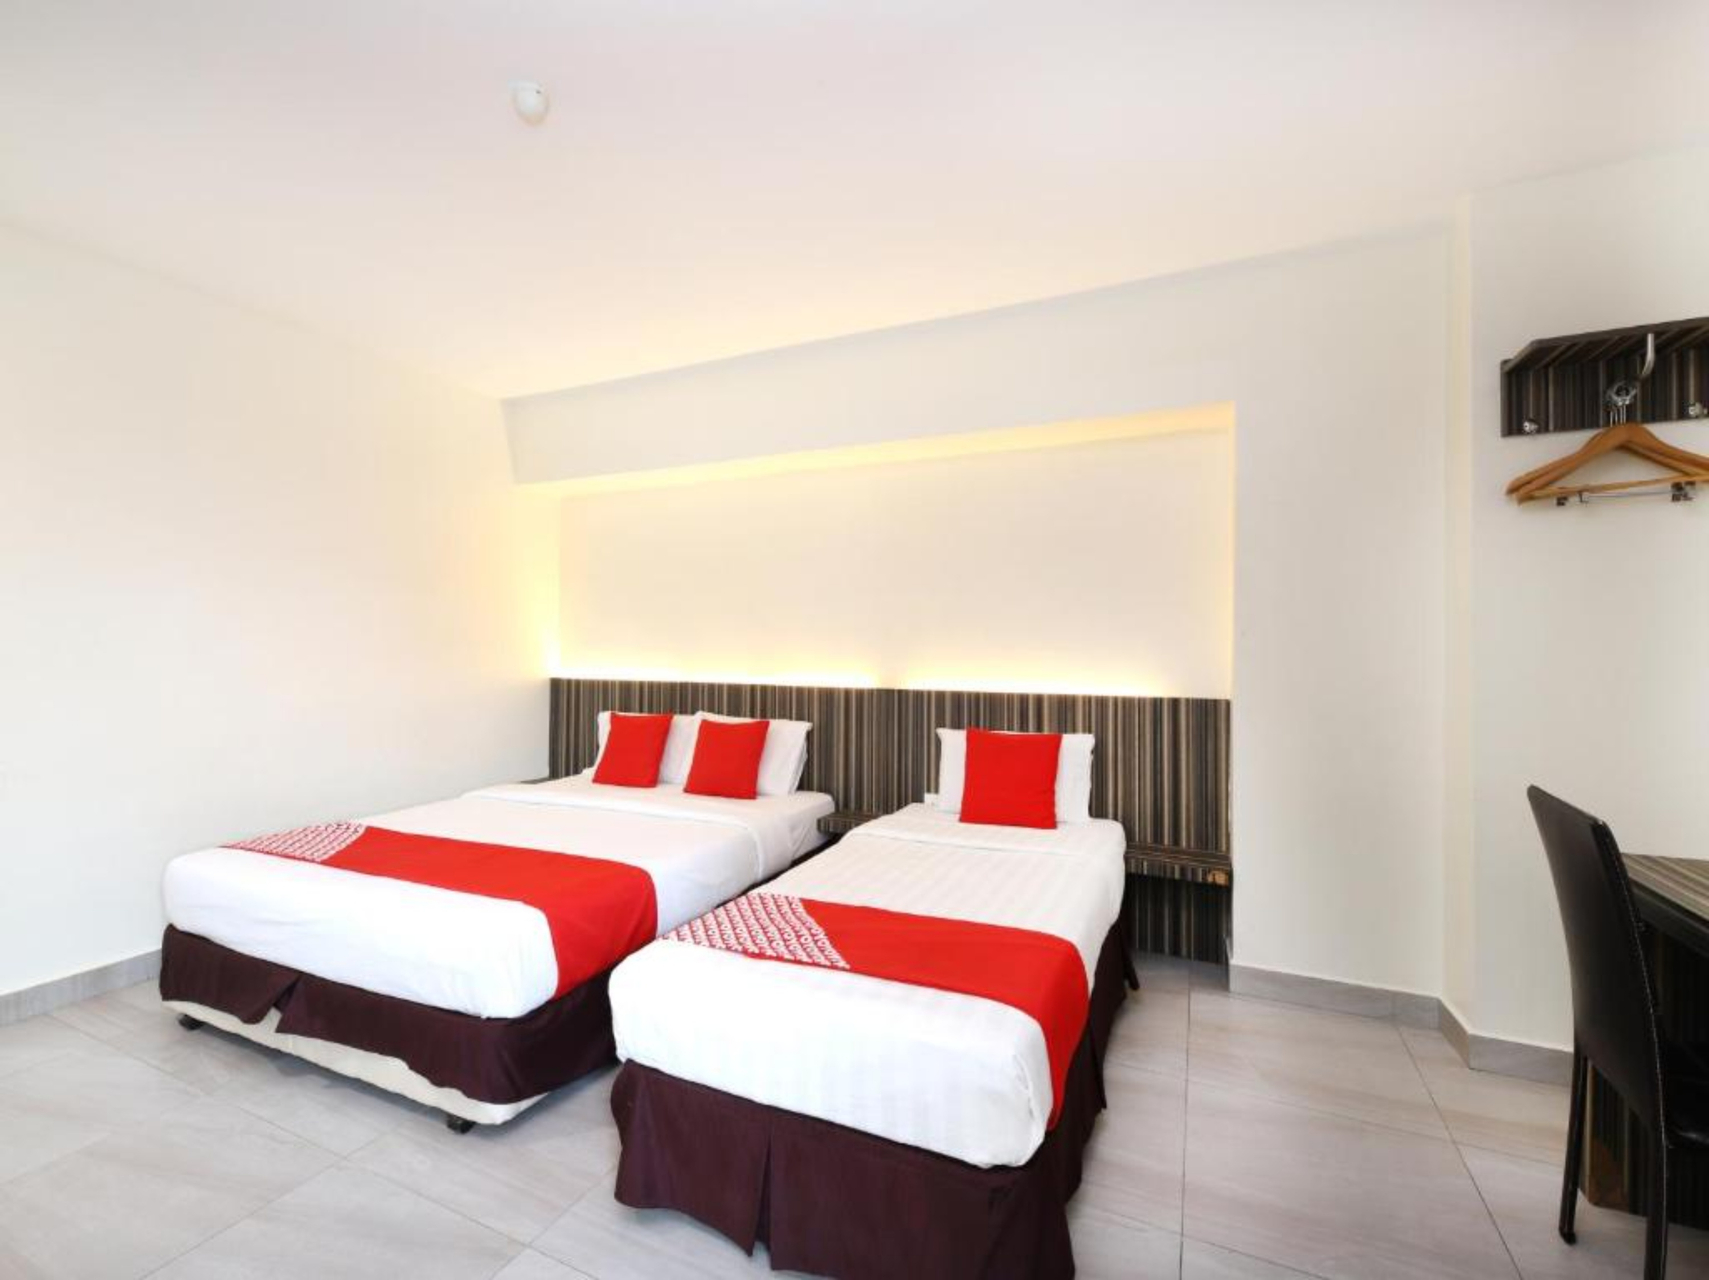 Bedroom 3, Sunrise Golden Hotel, Hulu Langat